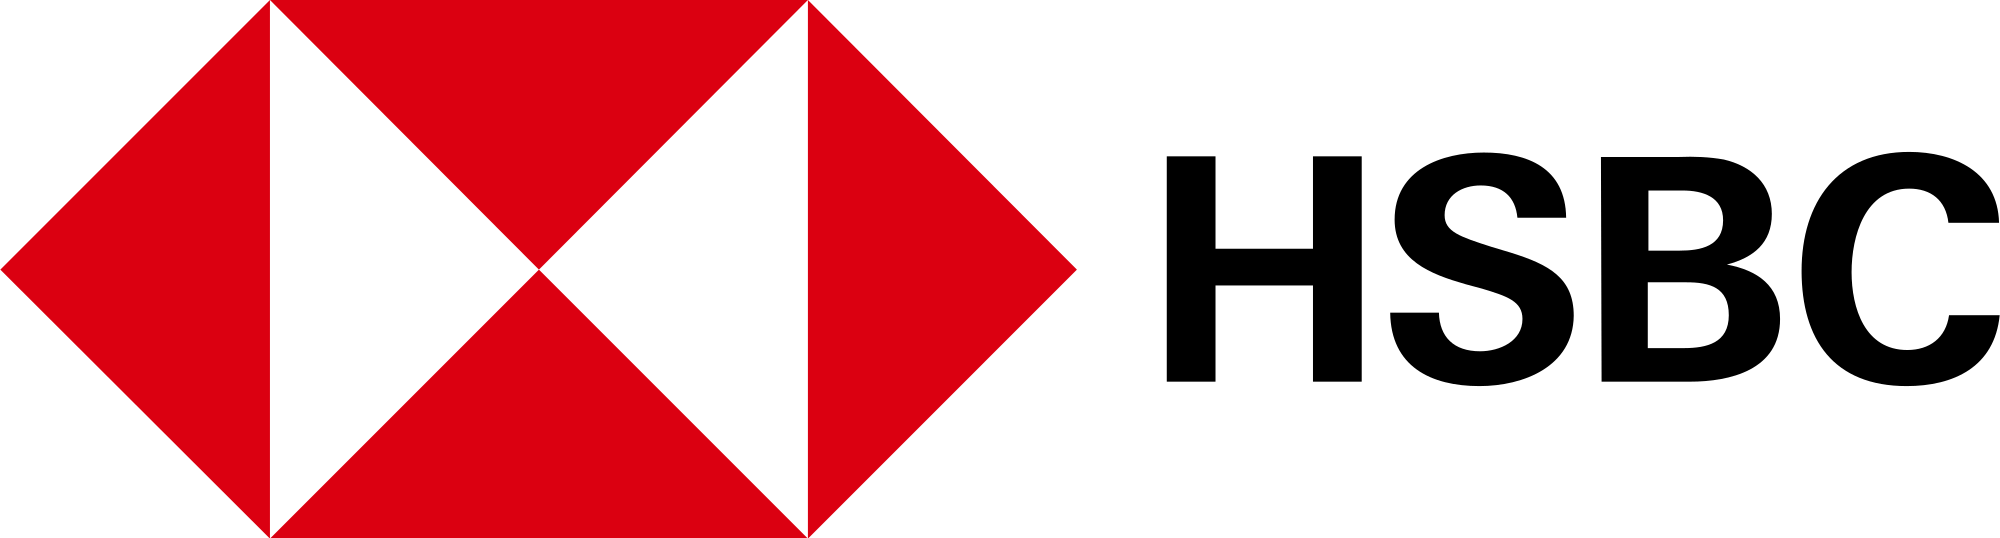 HSBC Logo - File:HSBC logo (2018).svg - Wikimedia Commons